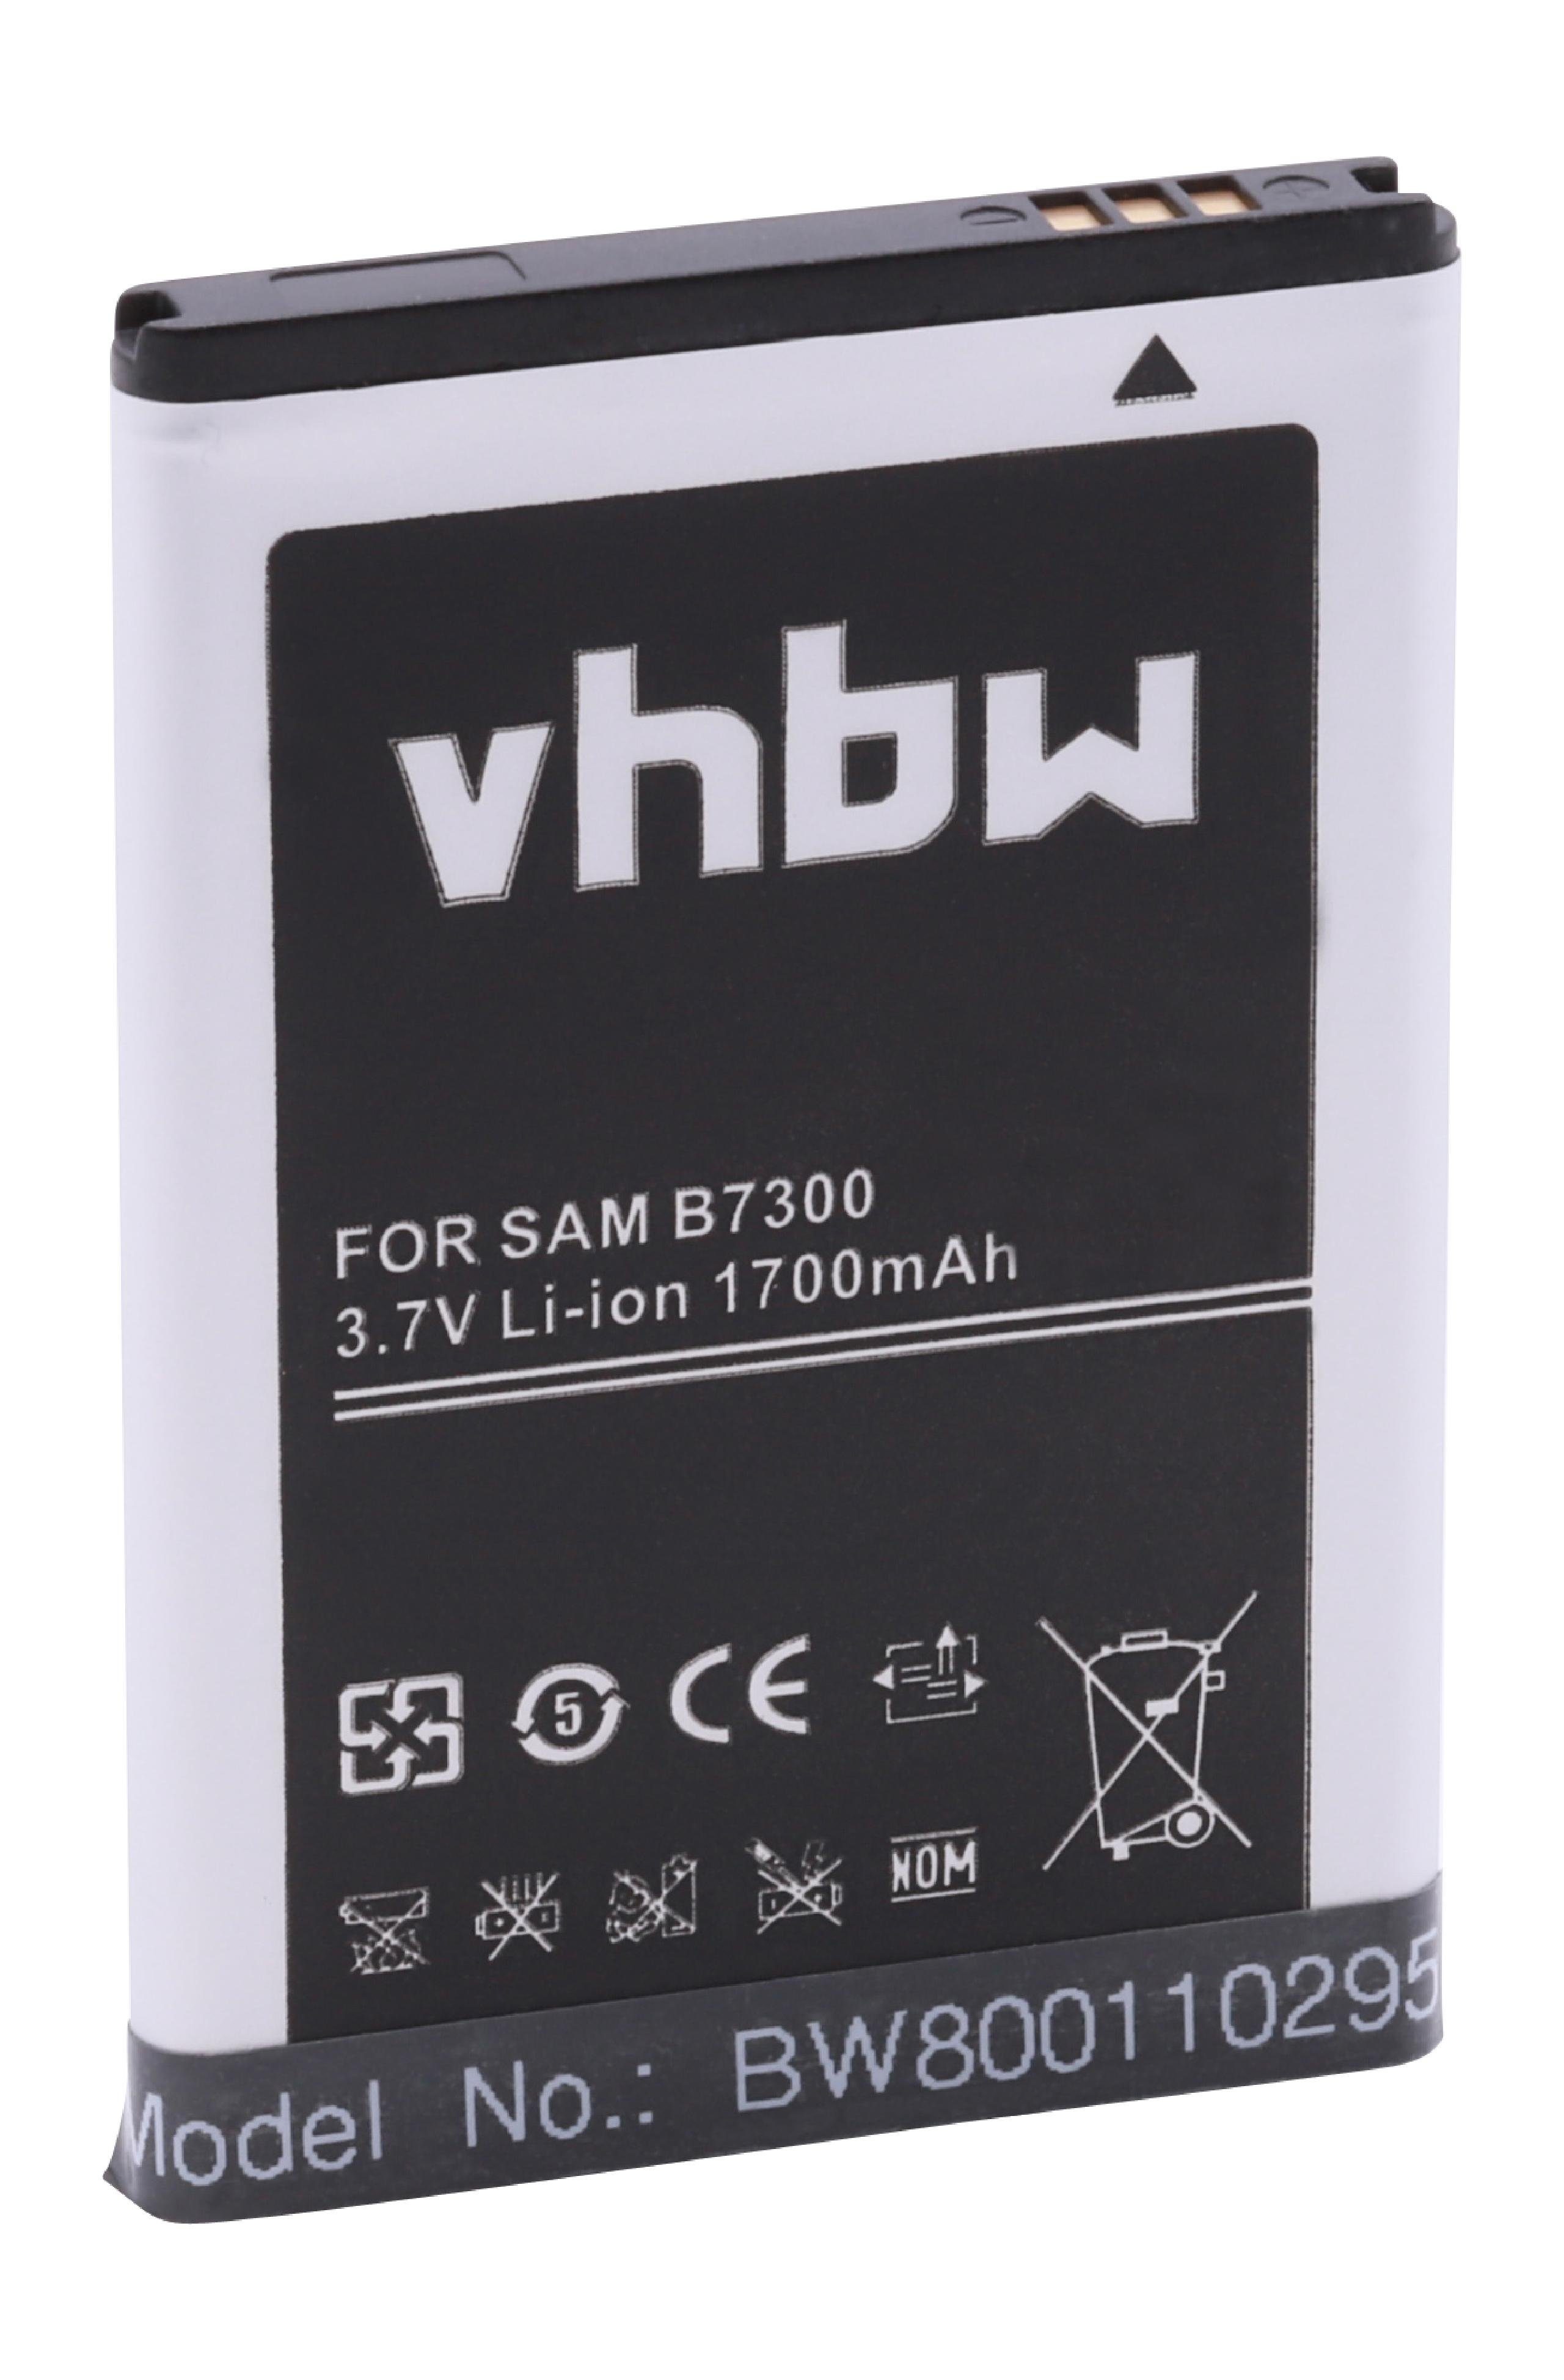 vhbw Smartphone-Akku passend für Kompatibel mit Samsung Galaxy Halo, CH-R720, Conquer 4G, Craft R900 Mobilfunk (1700mAh, 3,7V, Li-Ion) 1700 mAh